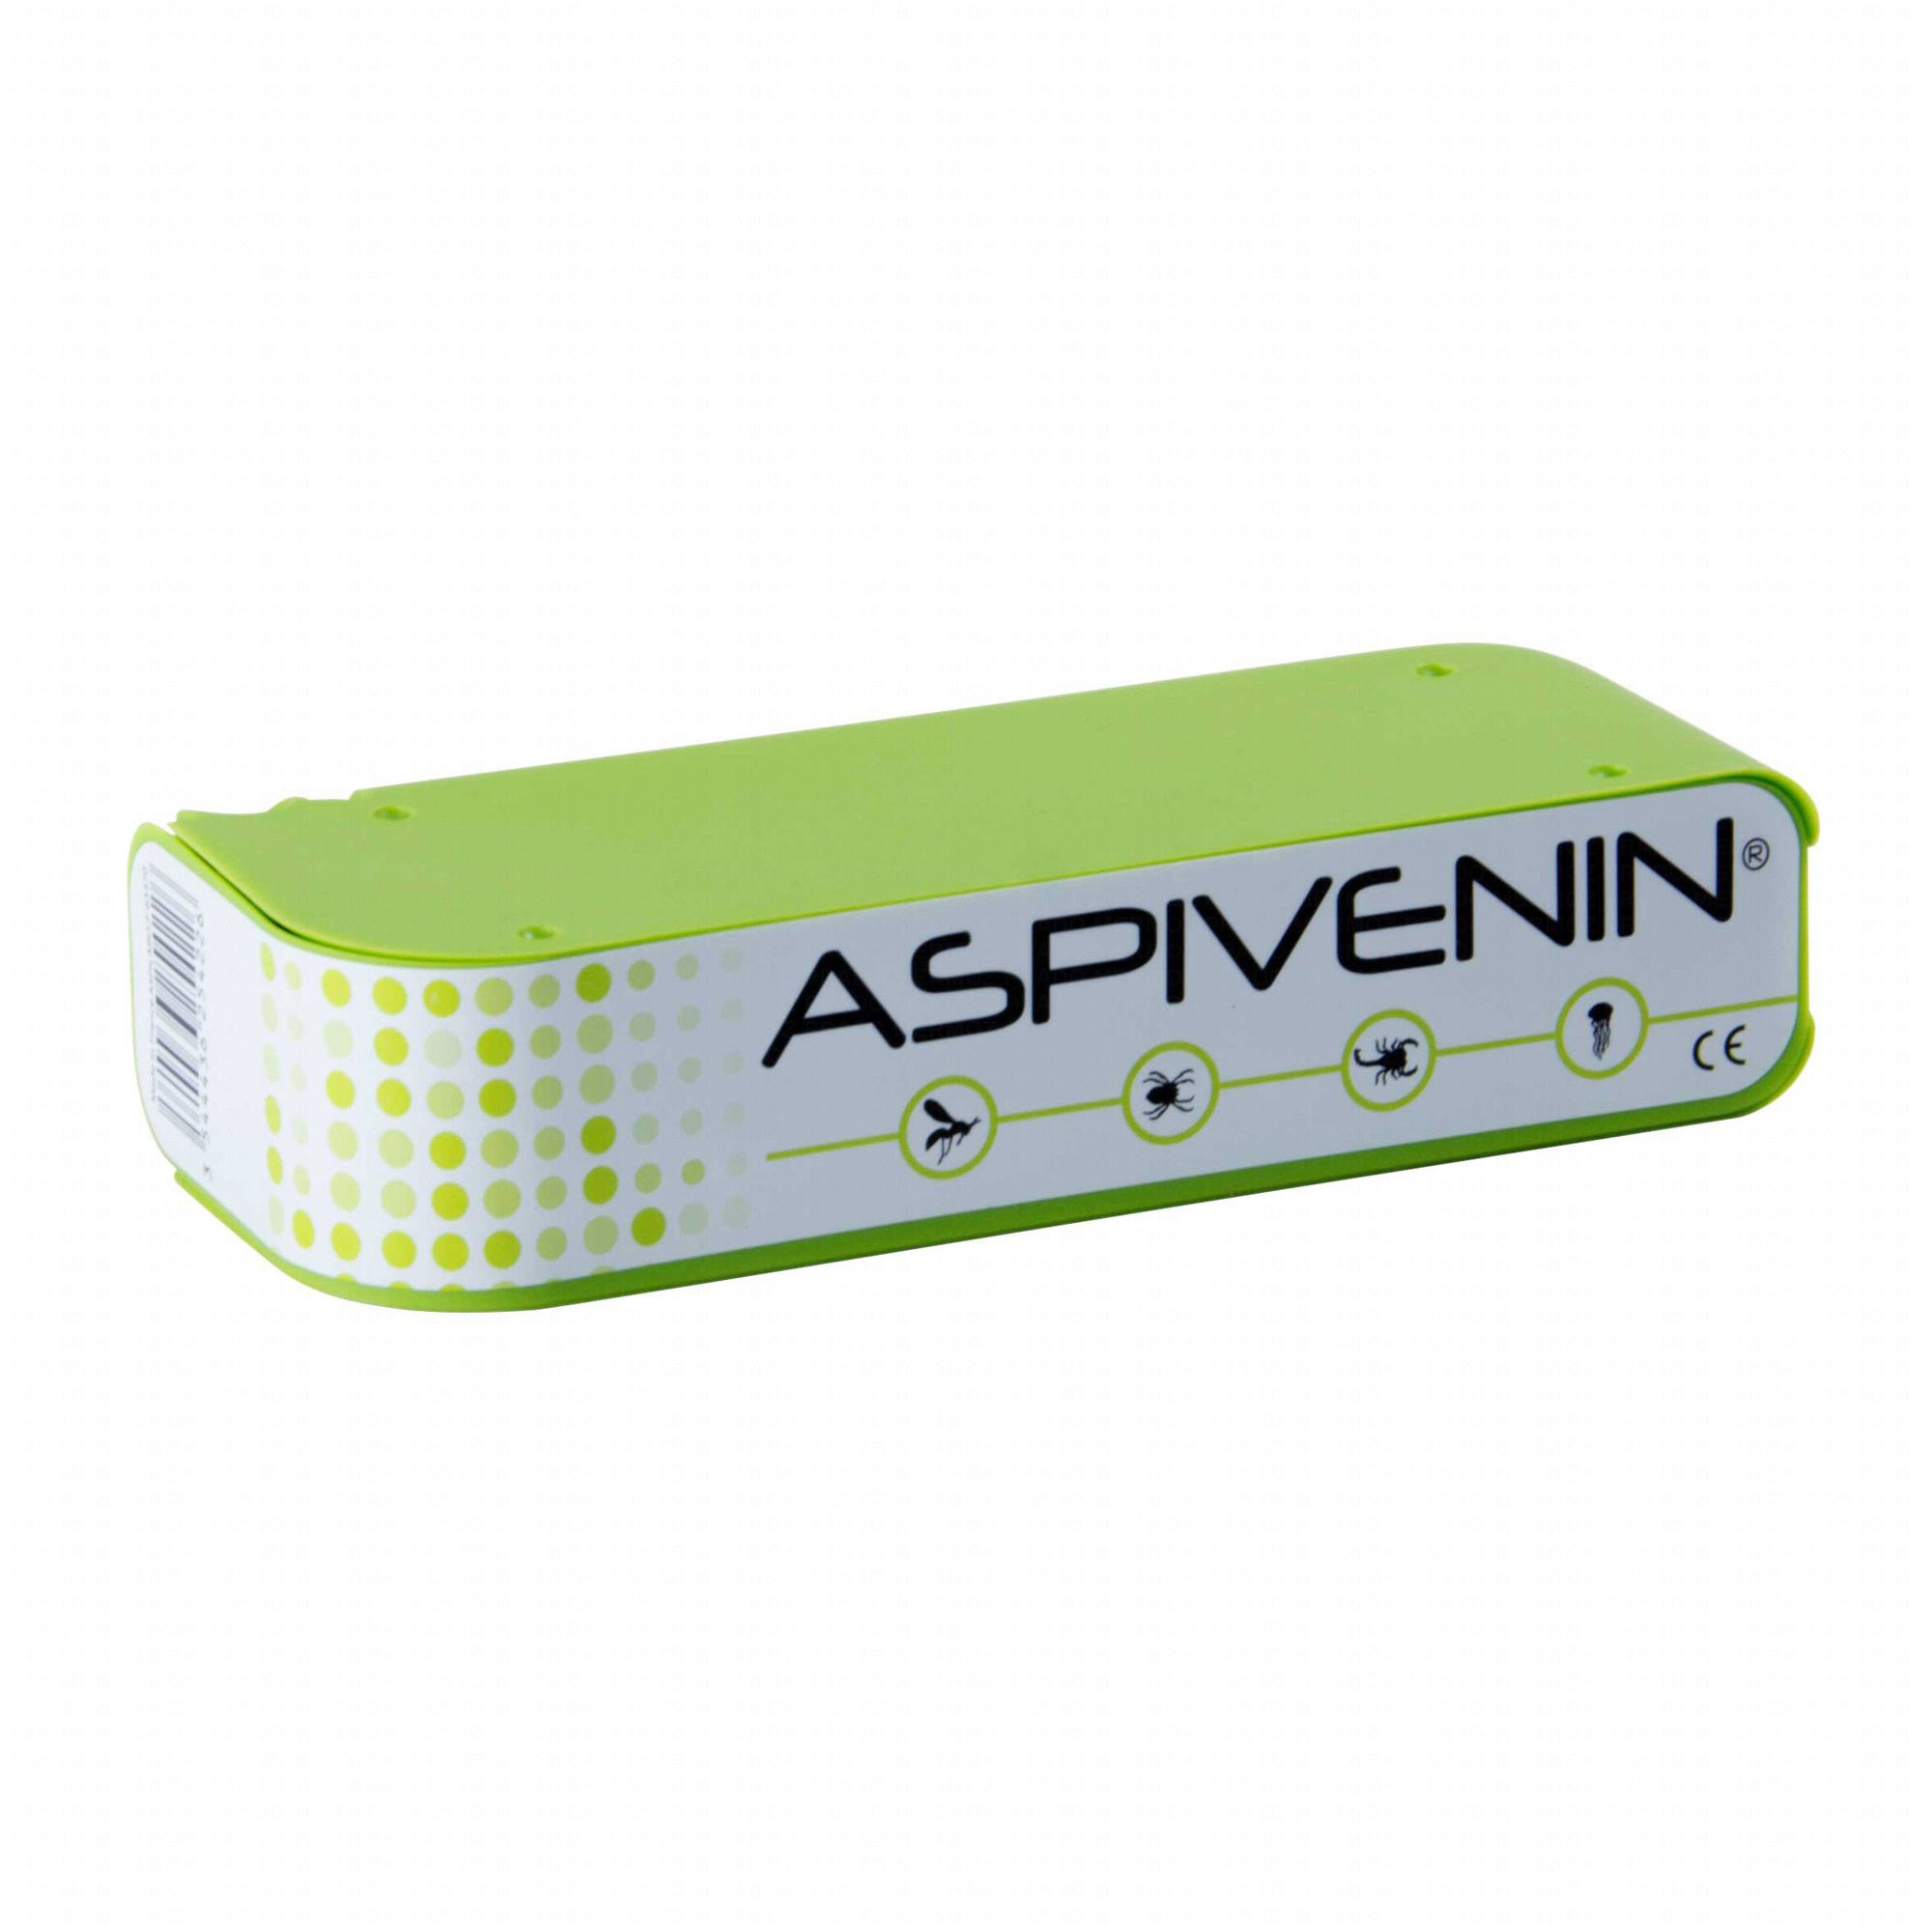 Aspivenin minipompe pour aspiration de venin - Pharmacie Prado Mermoz